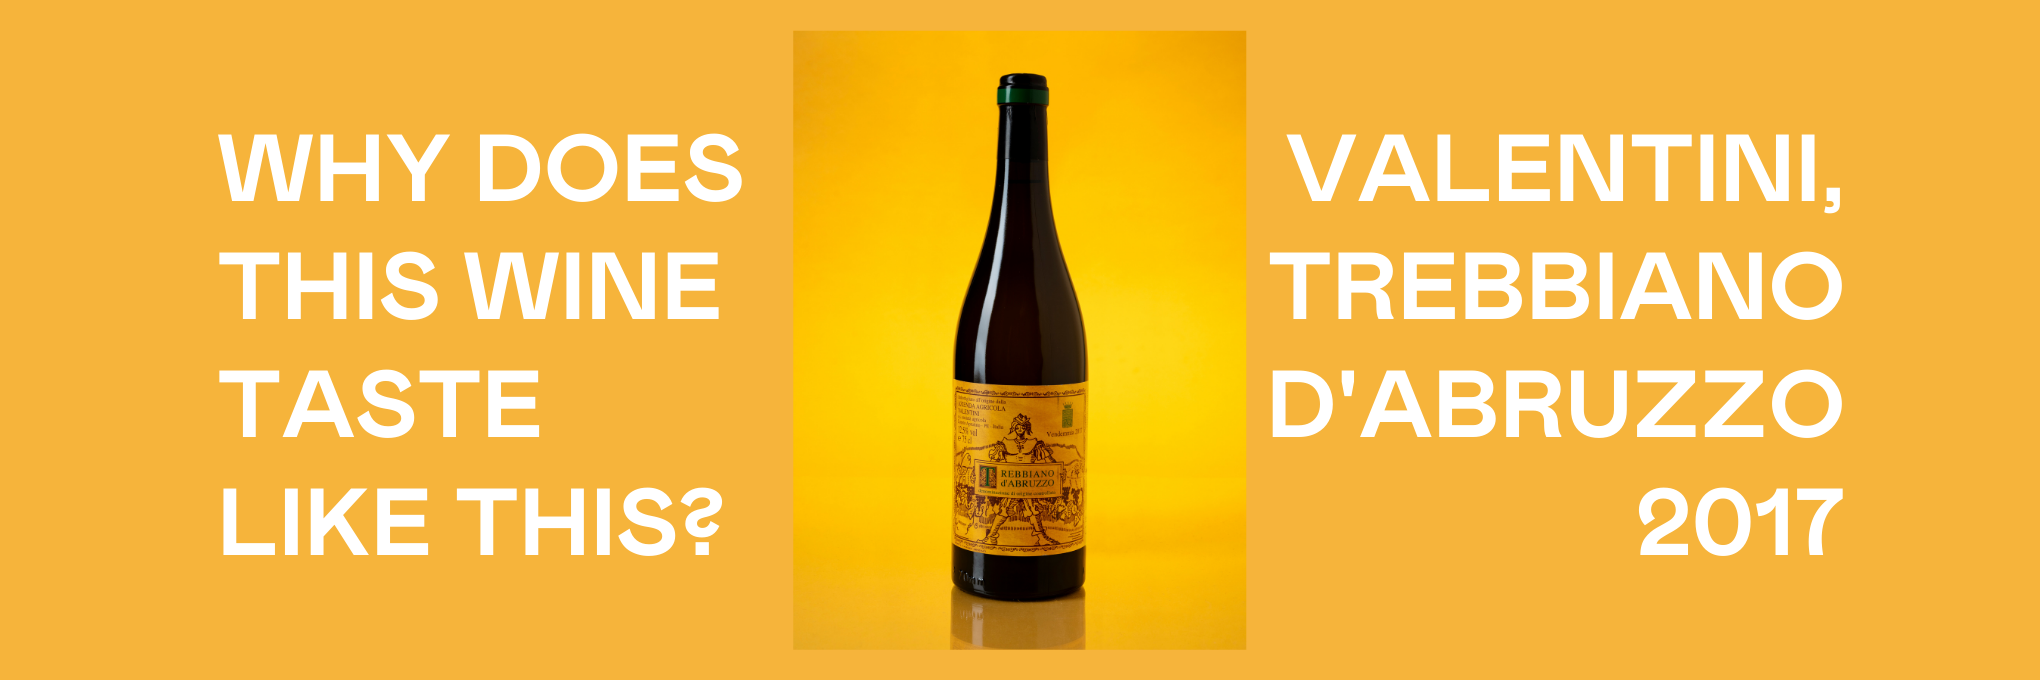 Valentini, Trebbiano d'Abruzzo 2017: Why Does This Wine Taste Like This?